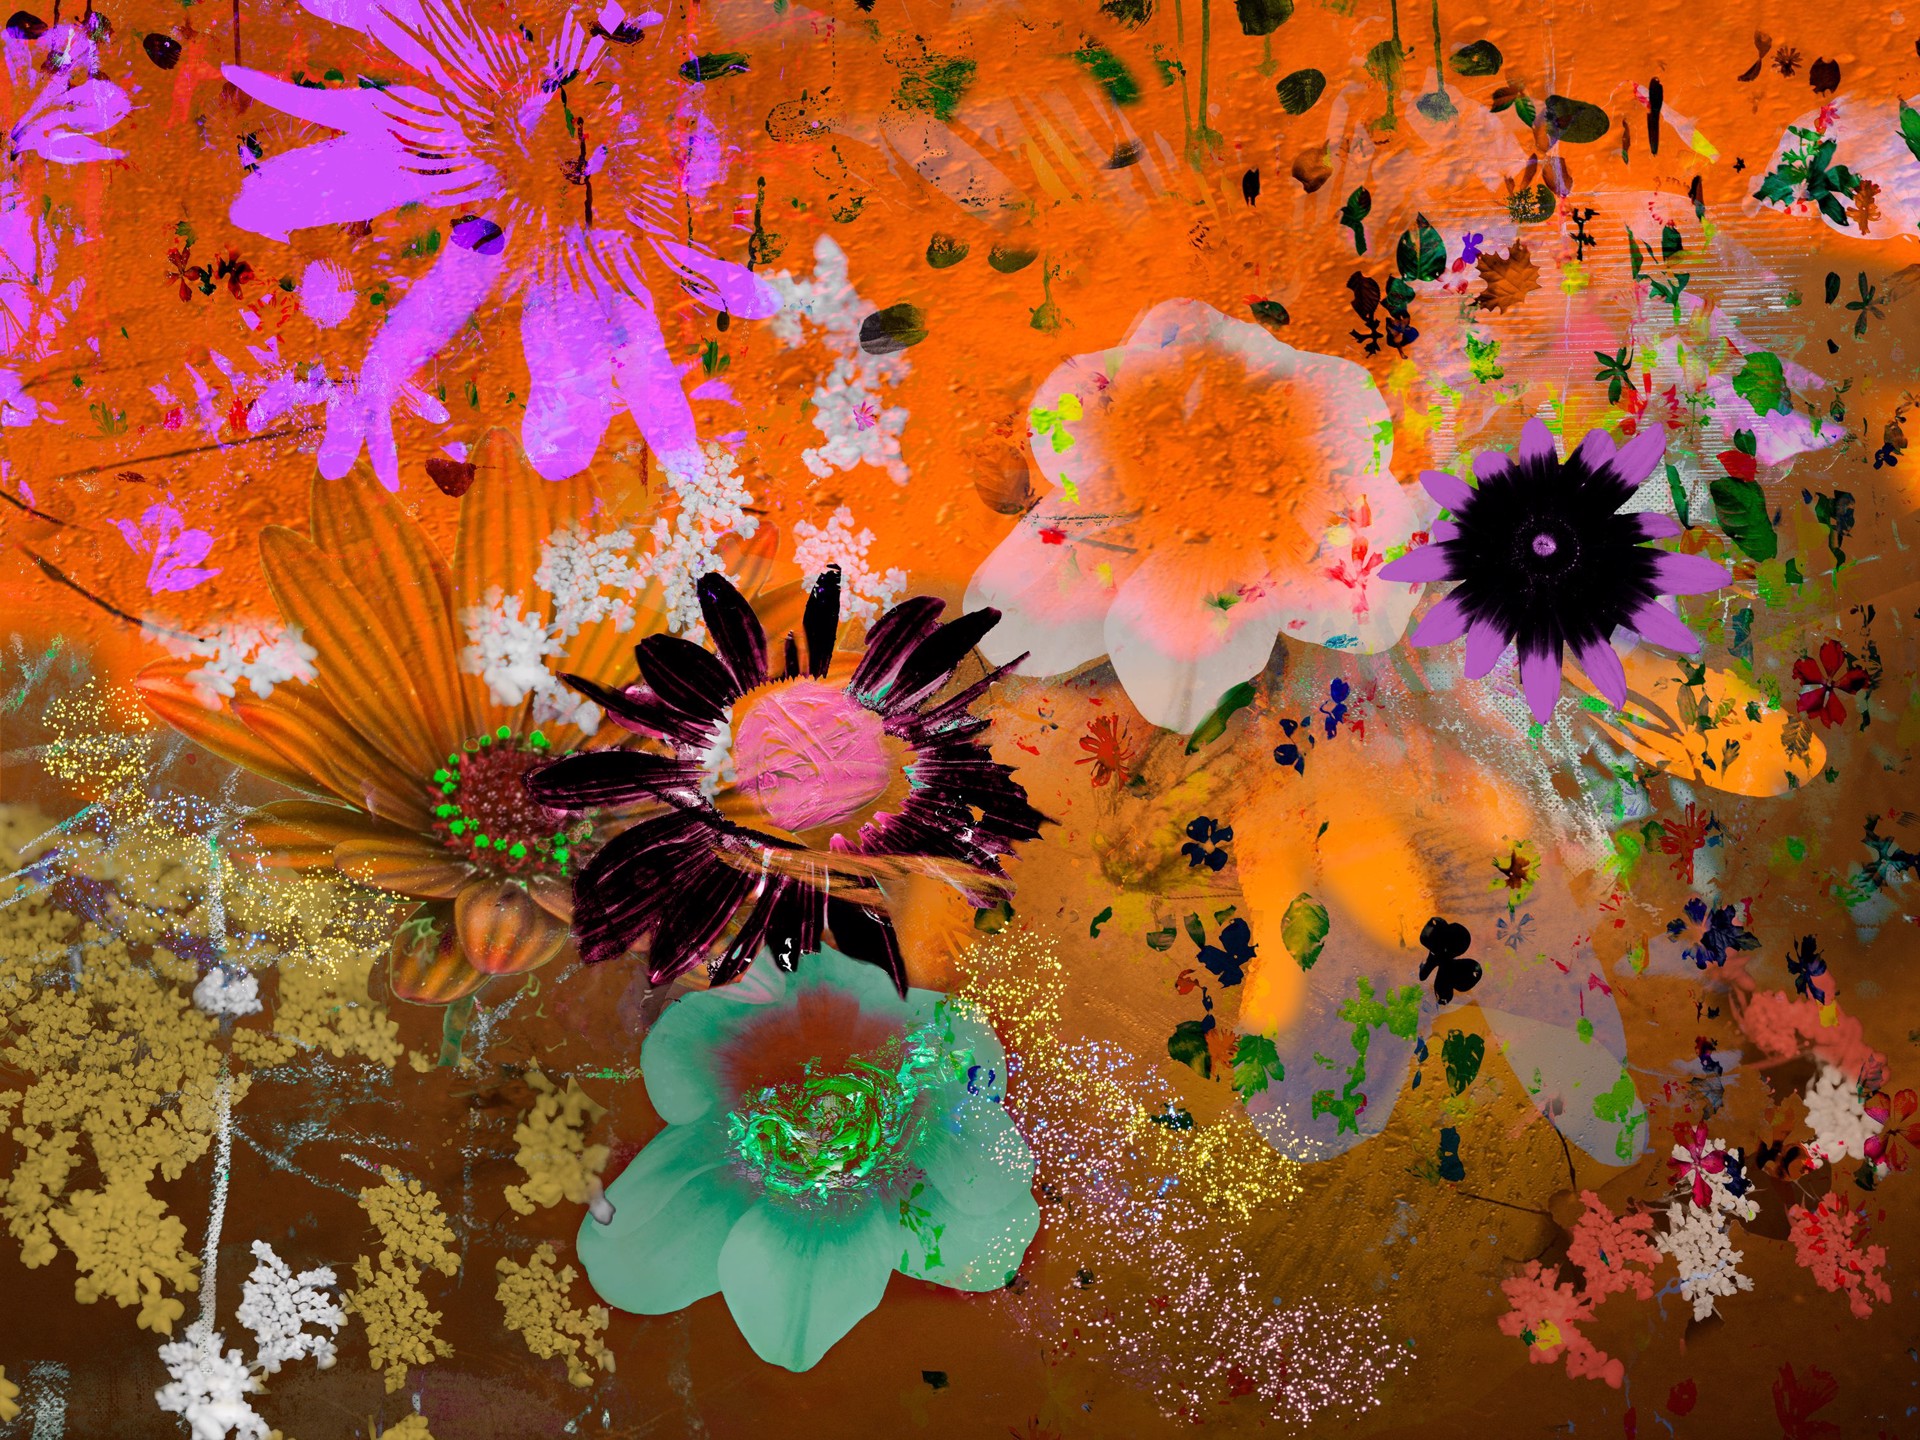 FLOWERS SERIES I NO.7 by CAROL EISENBERG